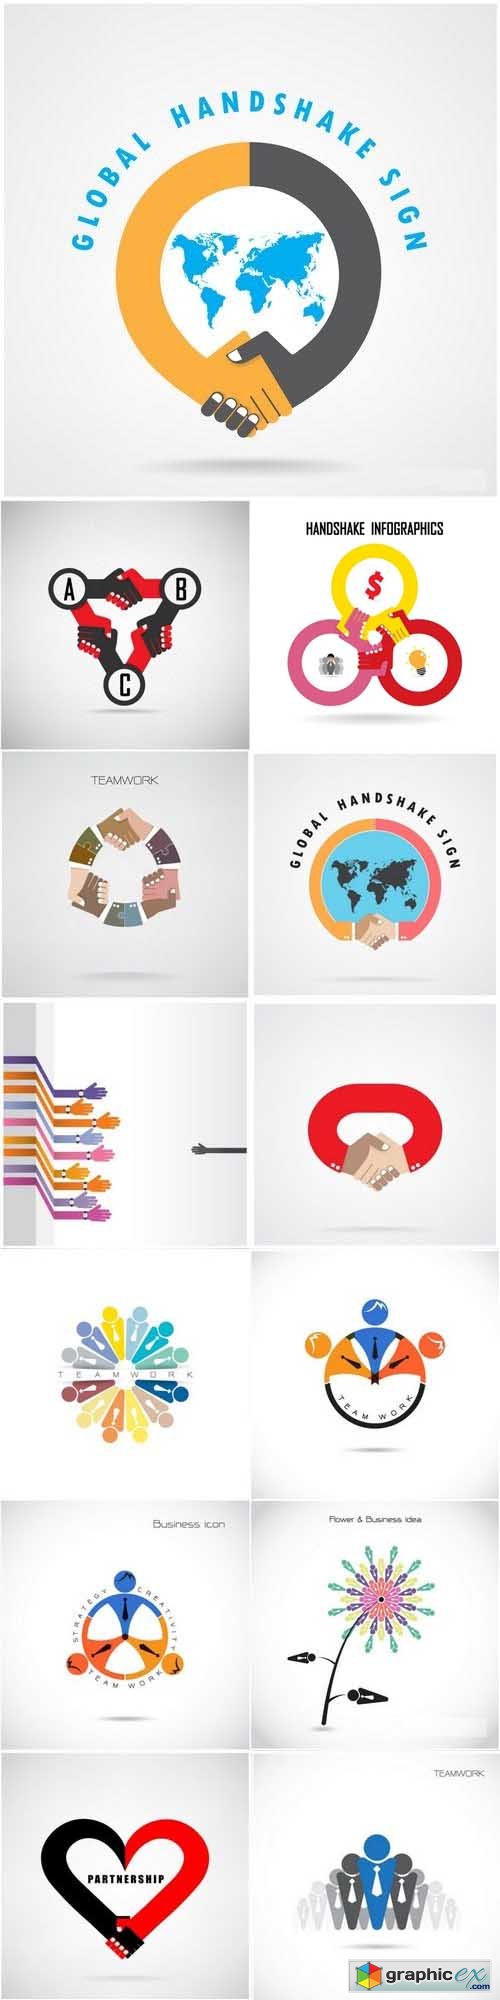 Business Teamwork & Handshake Logo